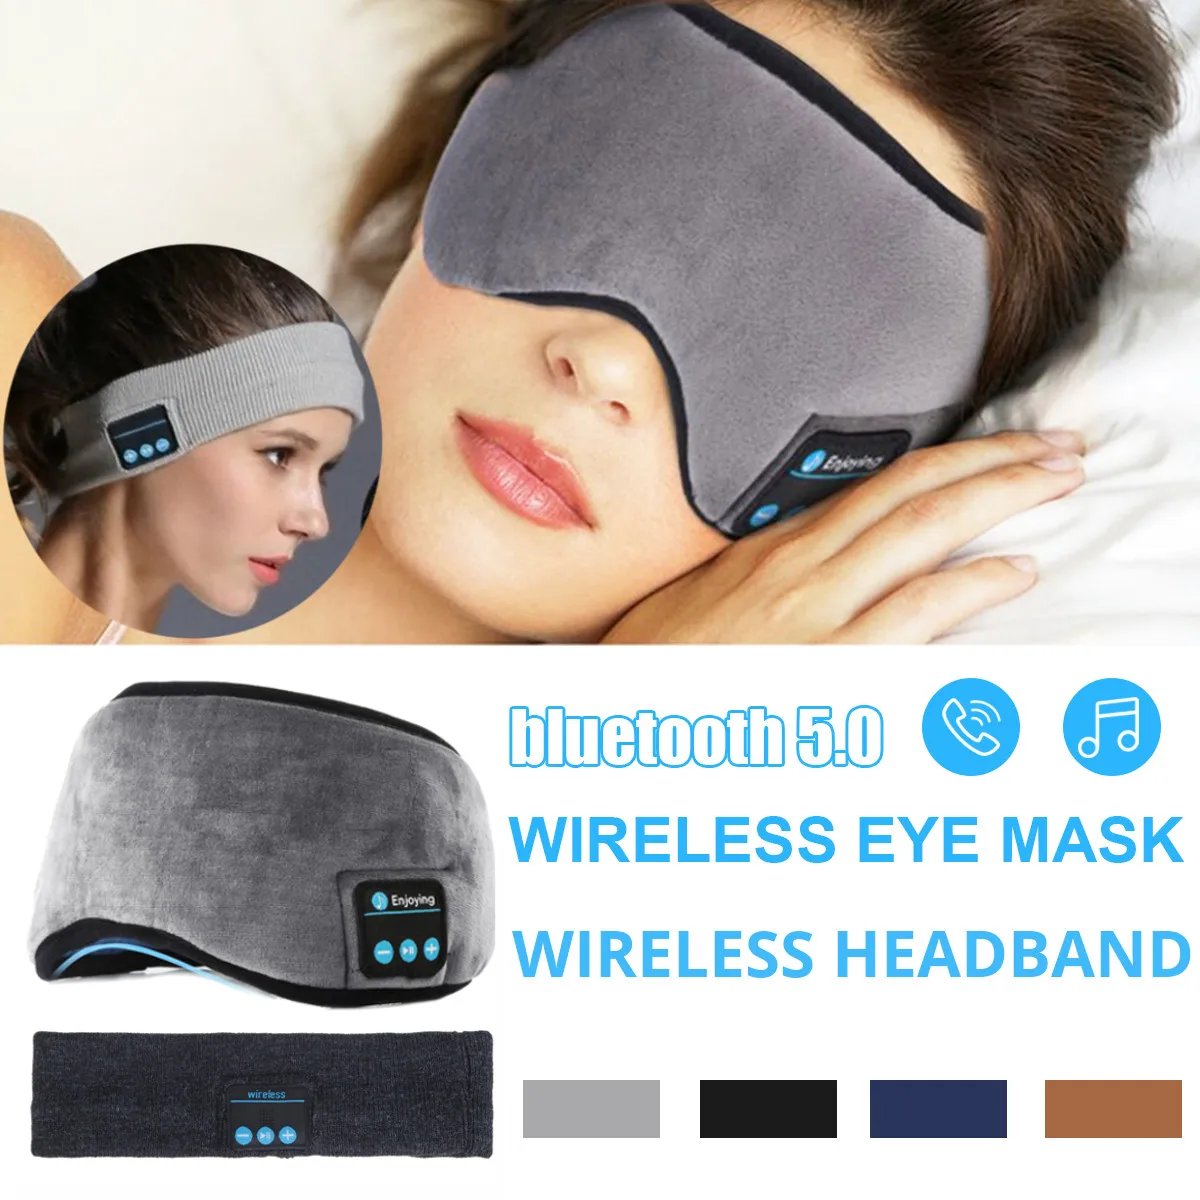 Wireless Bluetooth 5.0 Earphones Sleeping Eye Mask Music Player / Sports Headband Travel Headset Speakers Built-in Speakers Mic - Earphones & Headphones -